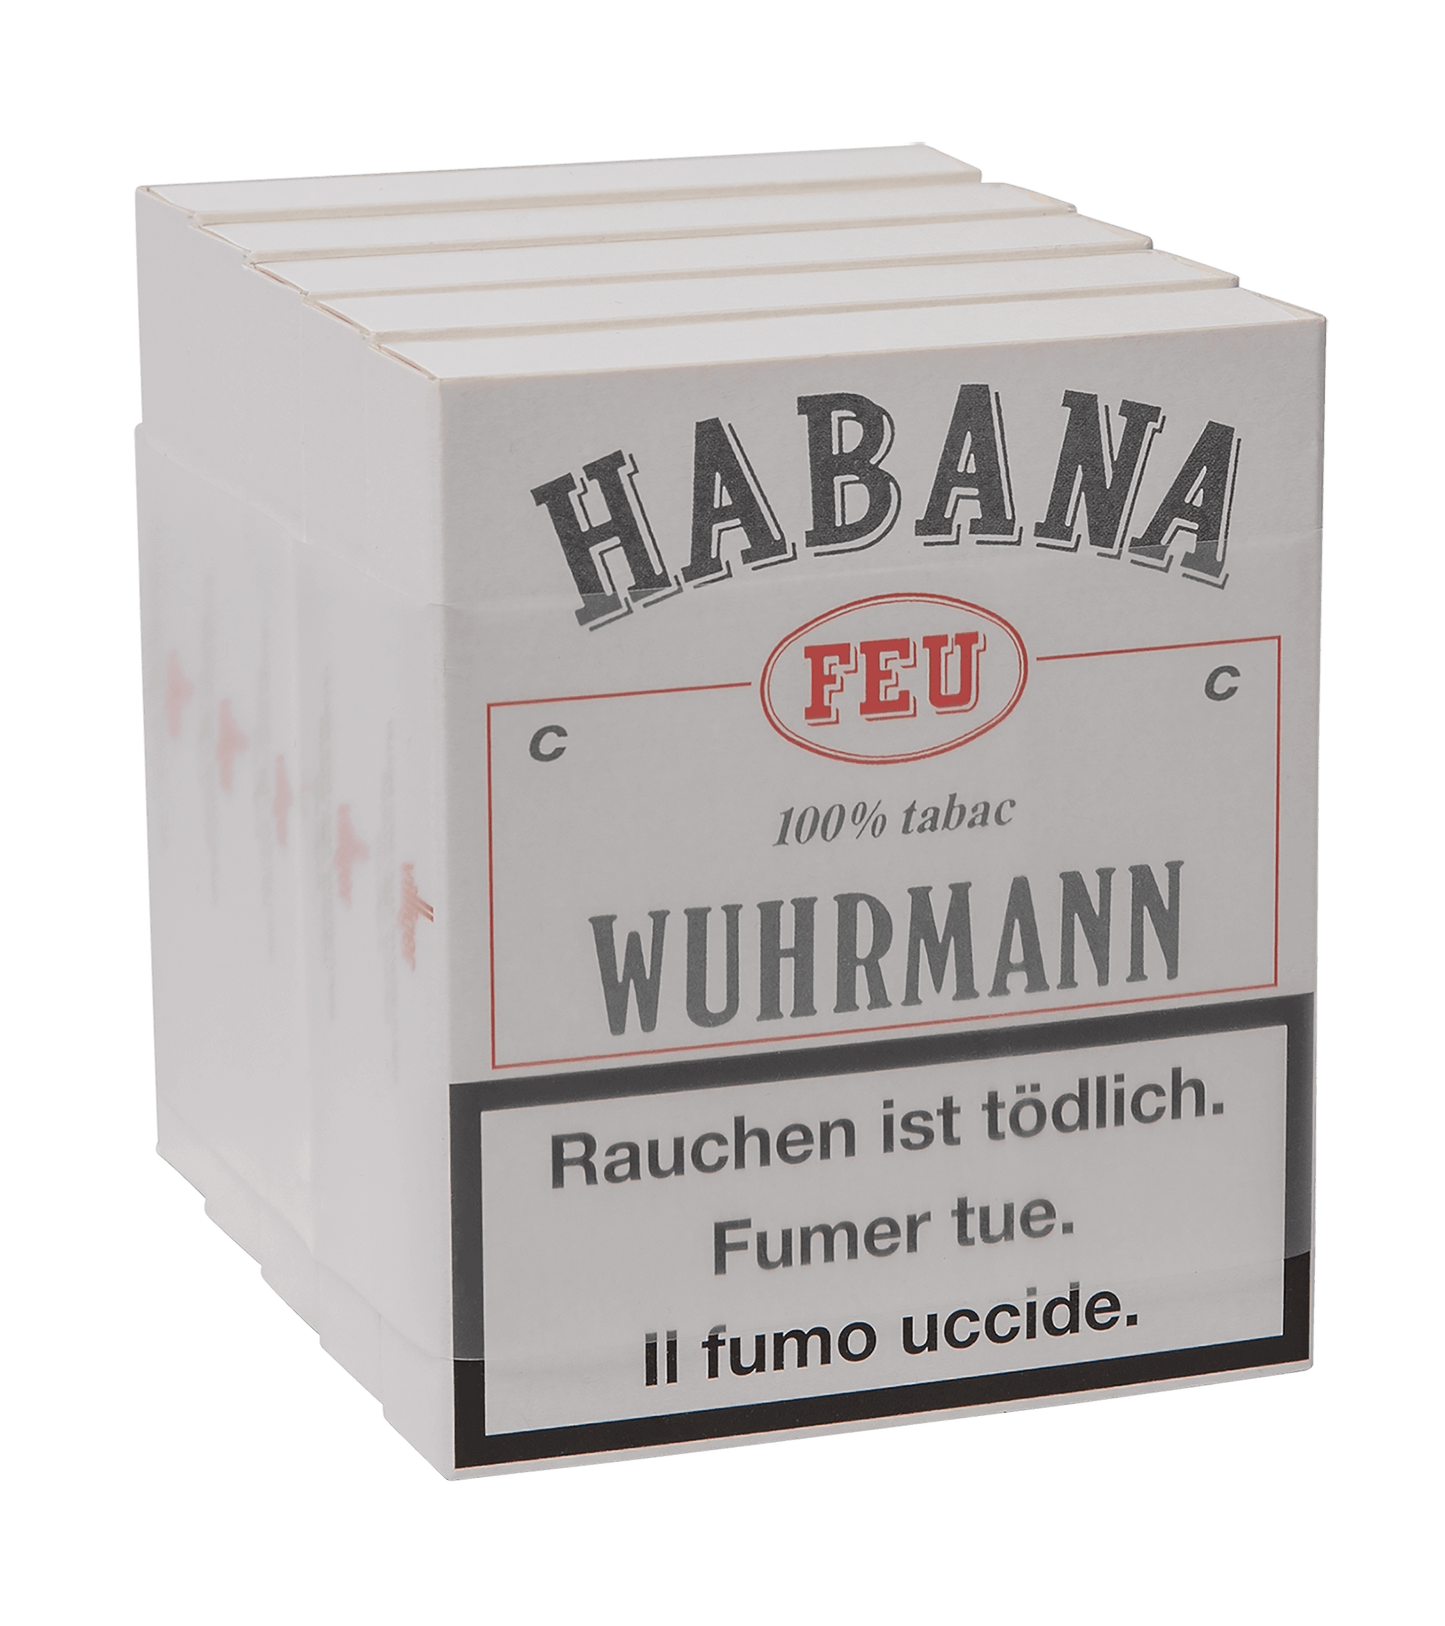 Habana-Feu C 5 Stück